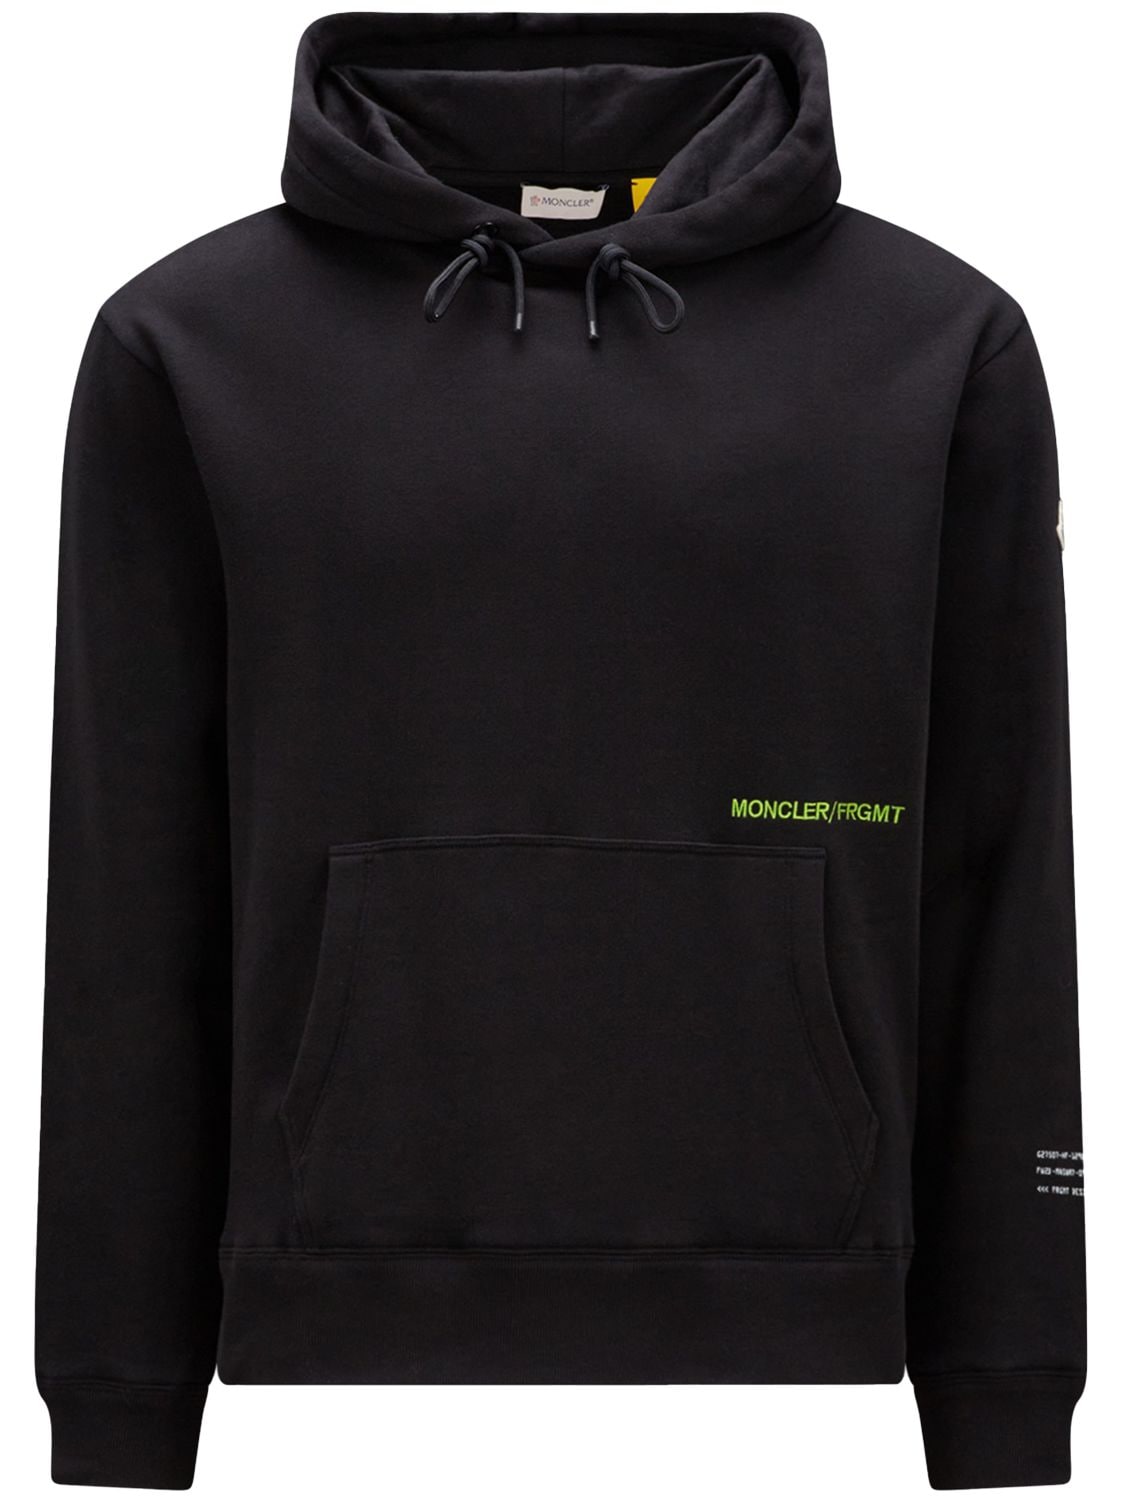 Moncler Genius Moncler X Frgmt Cotton Sweatshirt Hoodie In Black